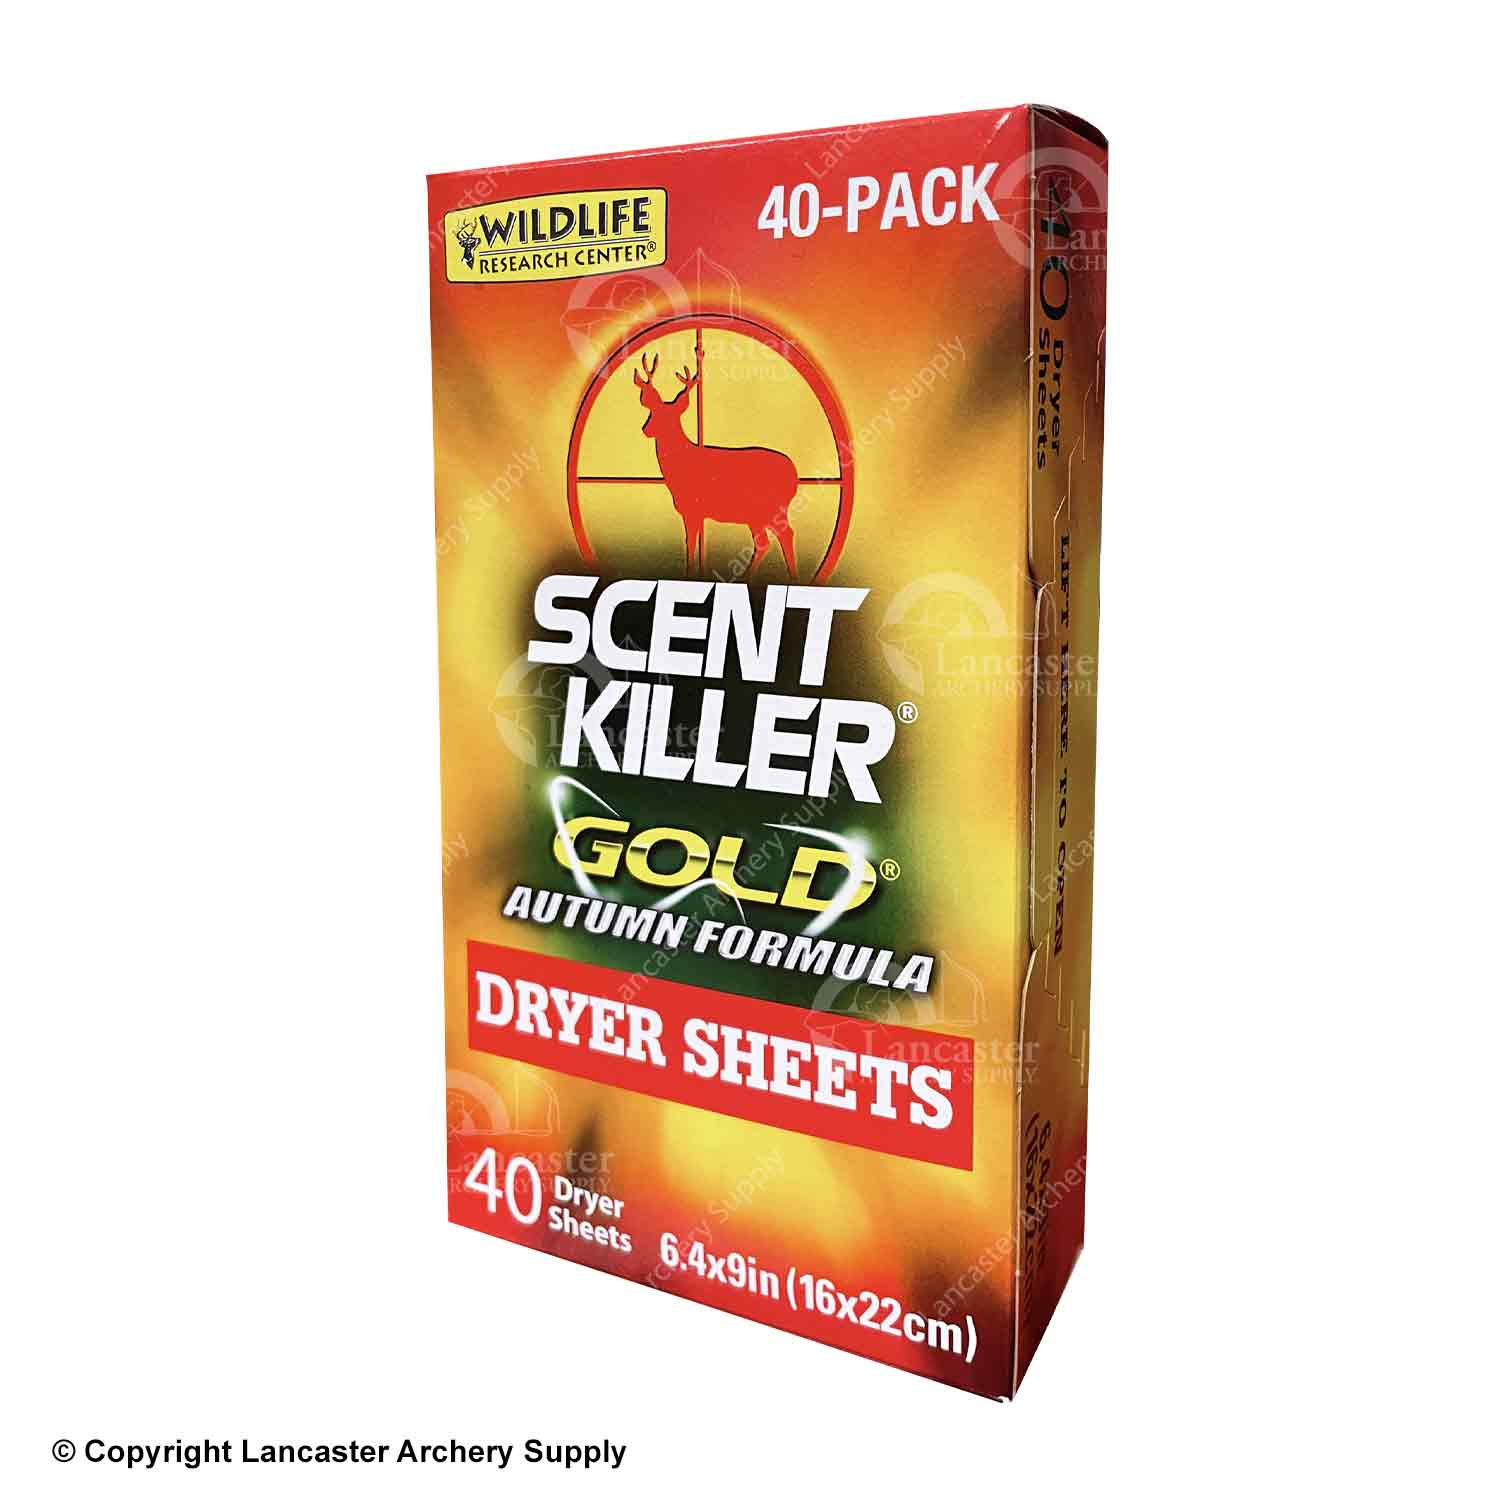 Wildlife Research Center Scent Killer Gold Autumn Formula Dryer Sheets (40 Pack)